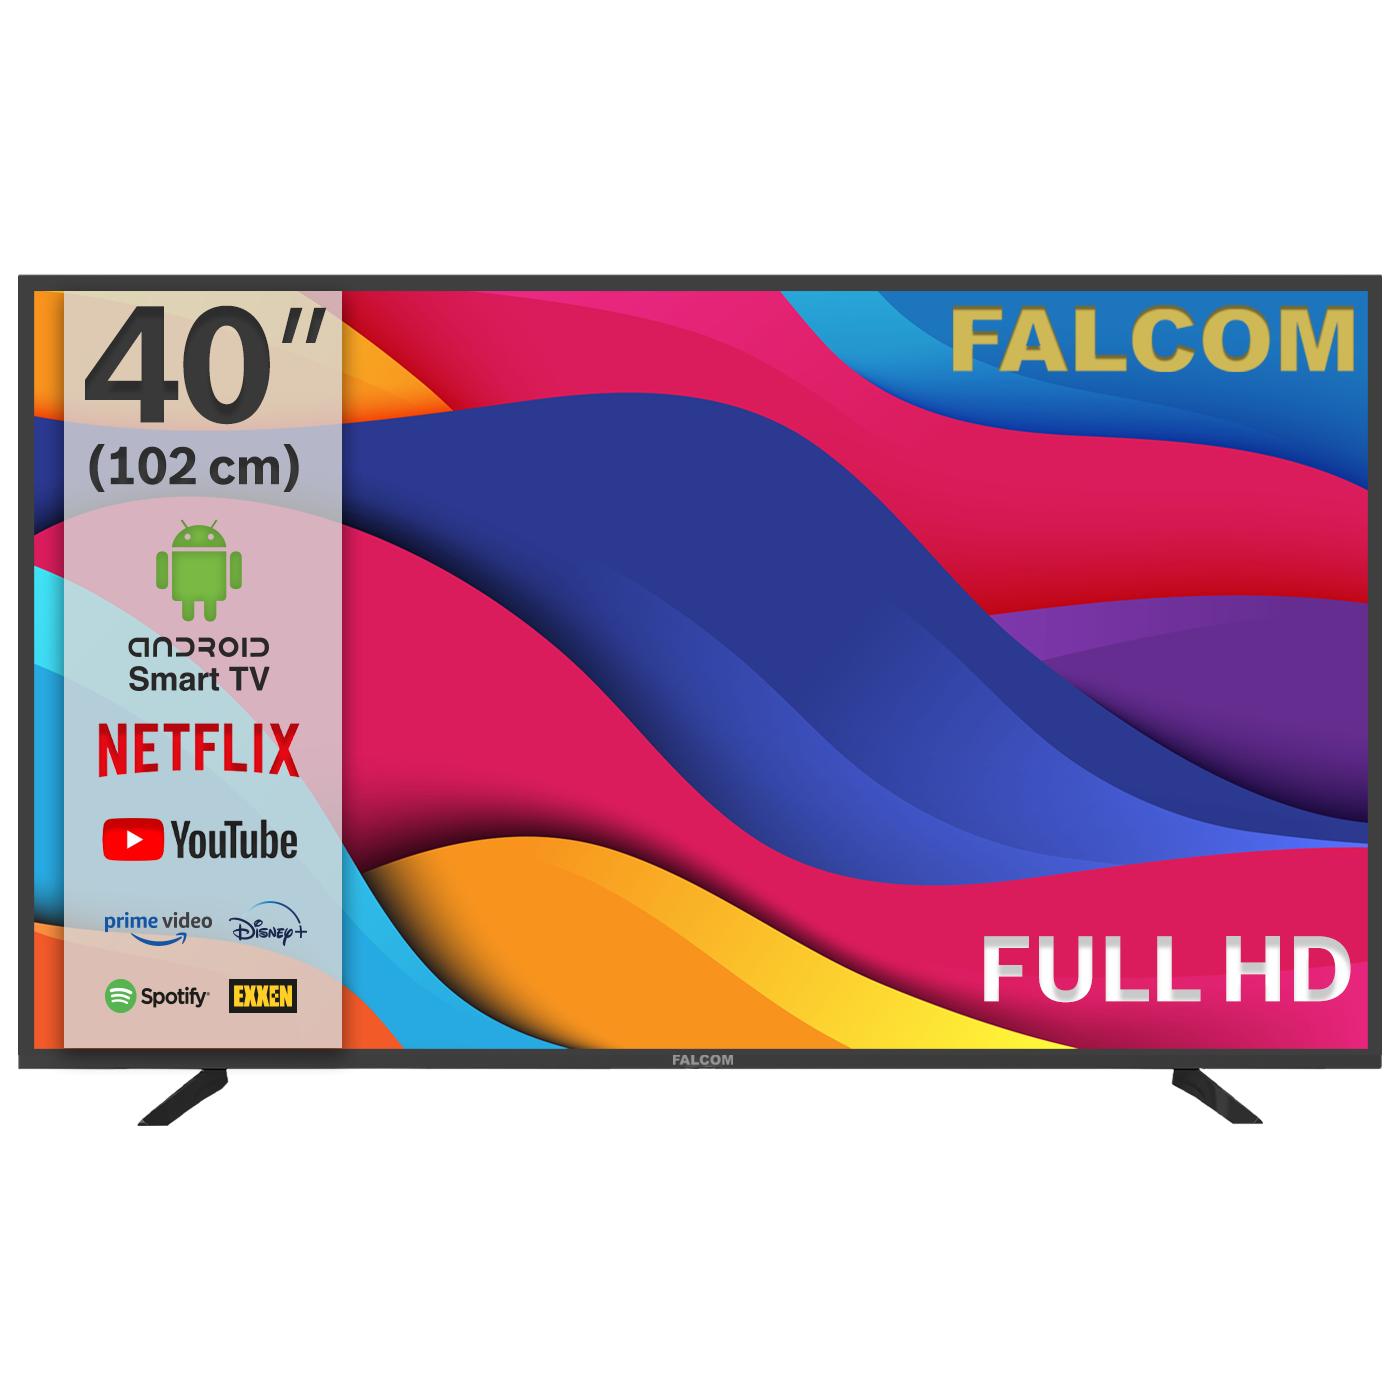 Falcom TV - Smart LED TV@Android 40